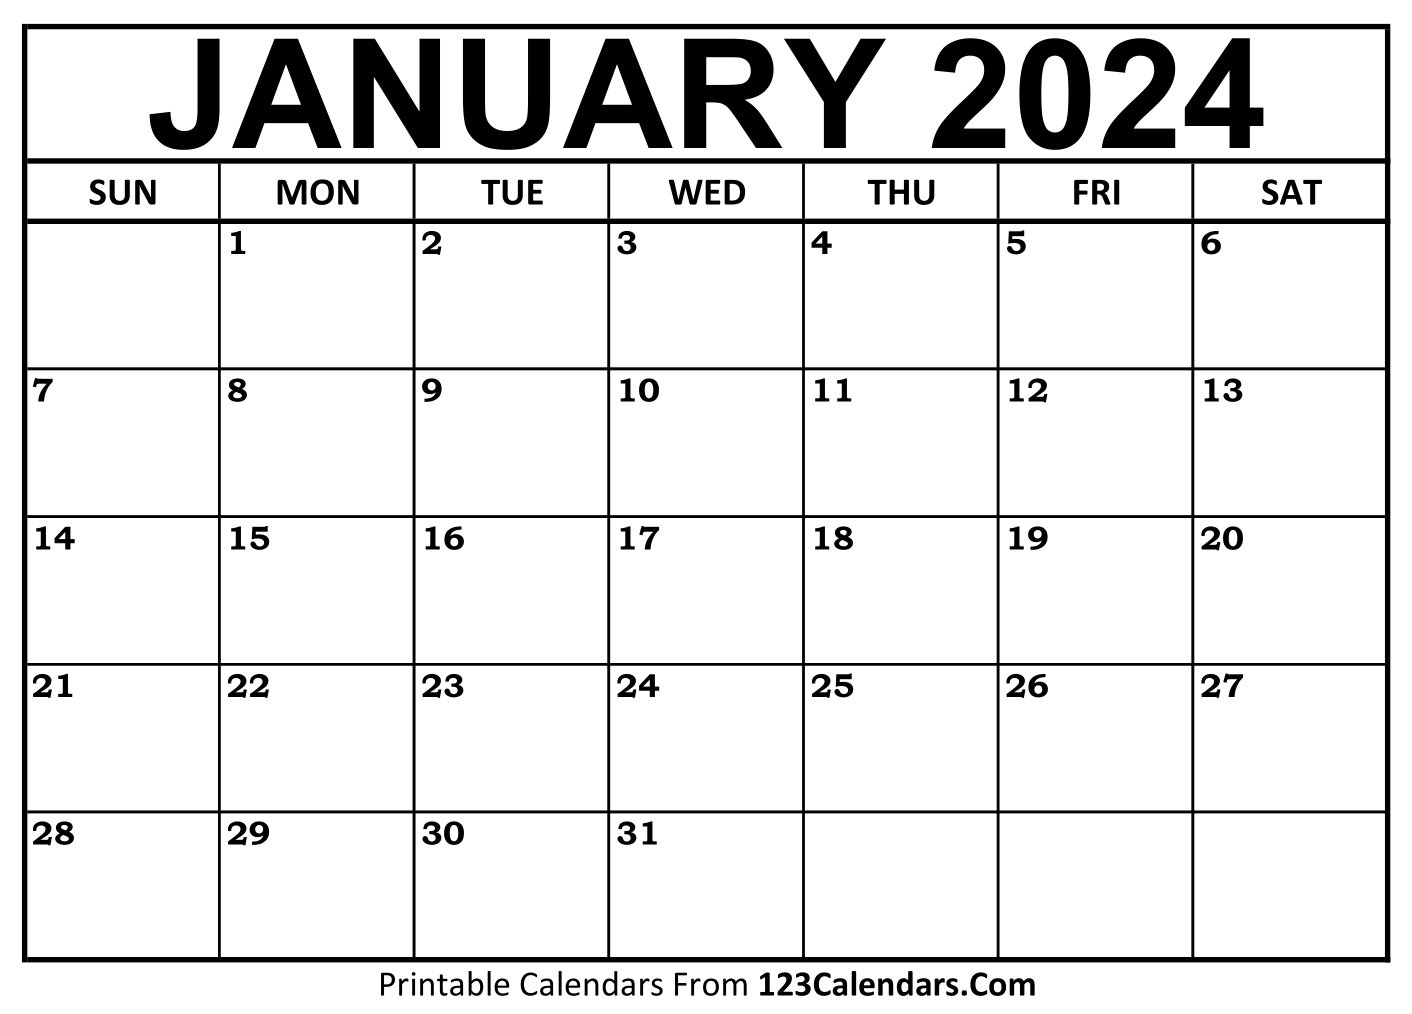 Printable January 2024 Calendar Templates - 123Calendars | January 2024 Calendar